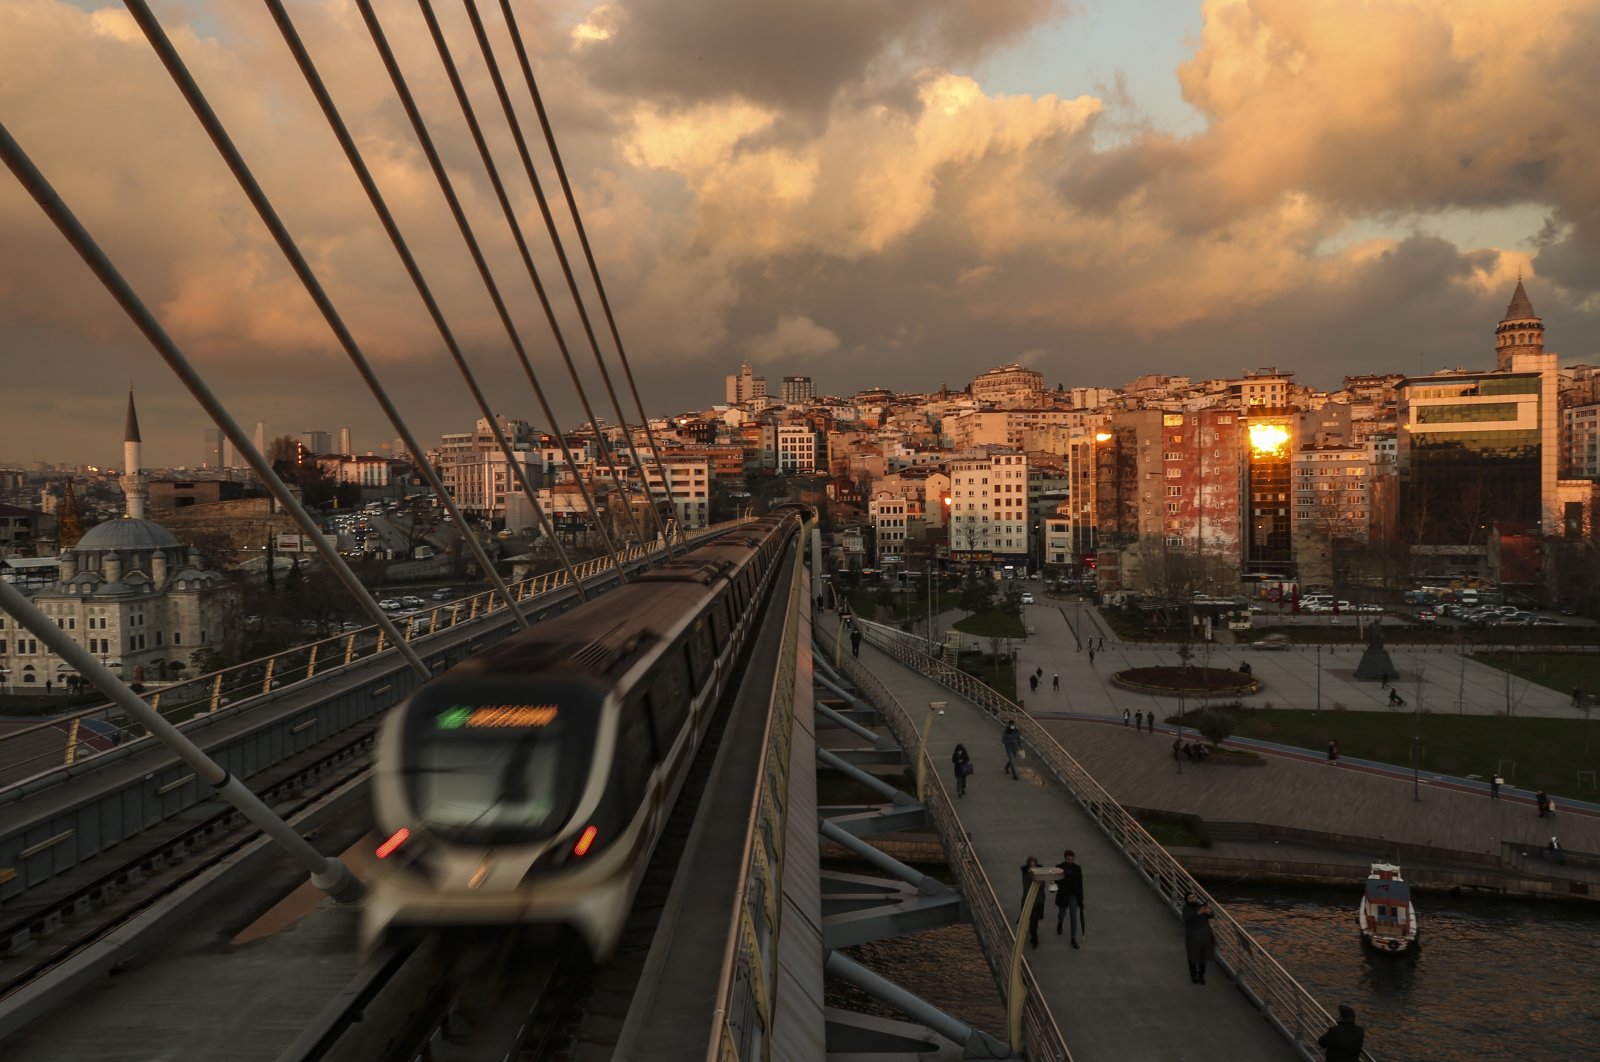 People walk at the Haliç metro station in Istanbul, Turkey, Jan. 14, 2021. (AP Photo)